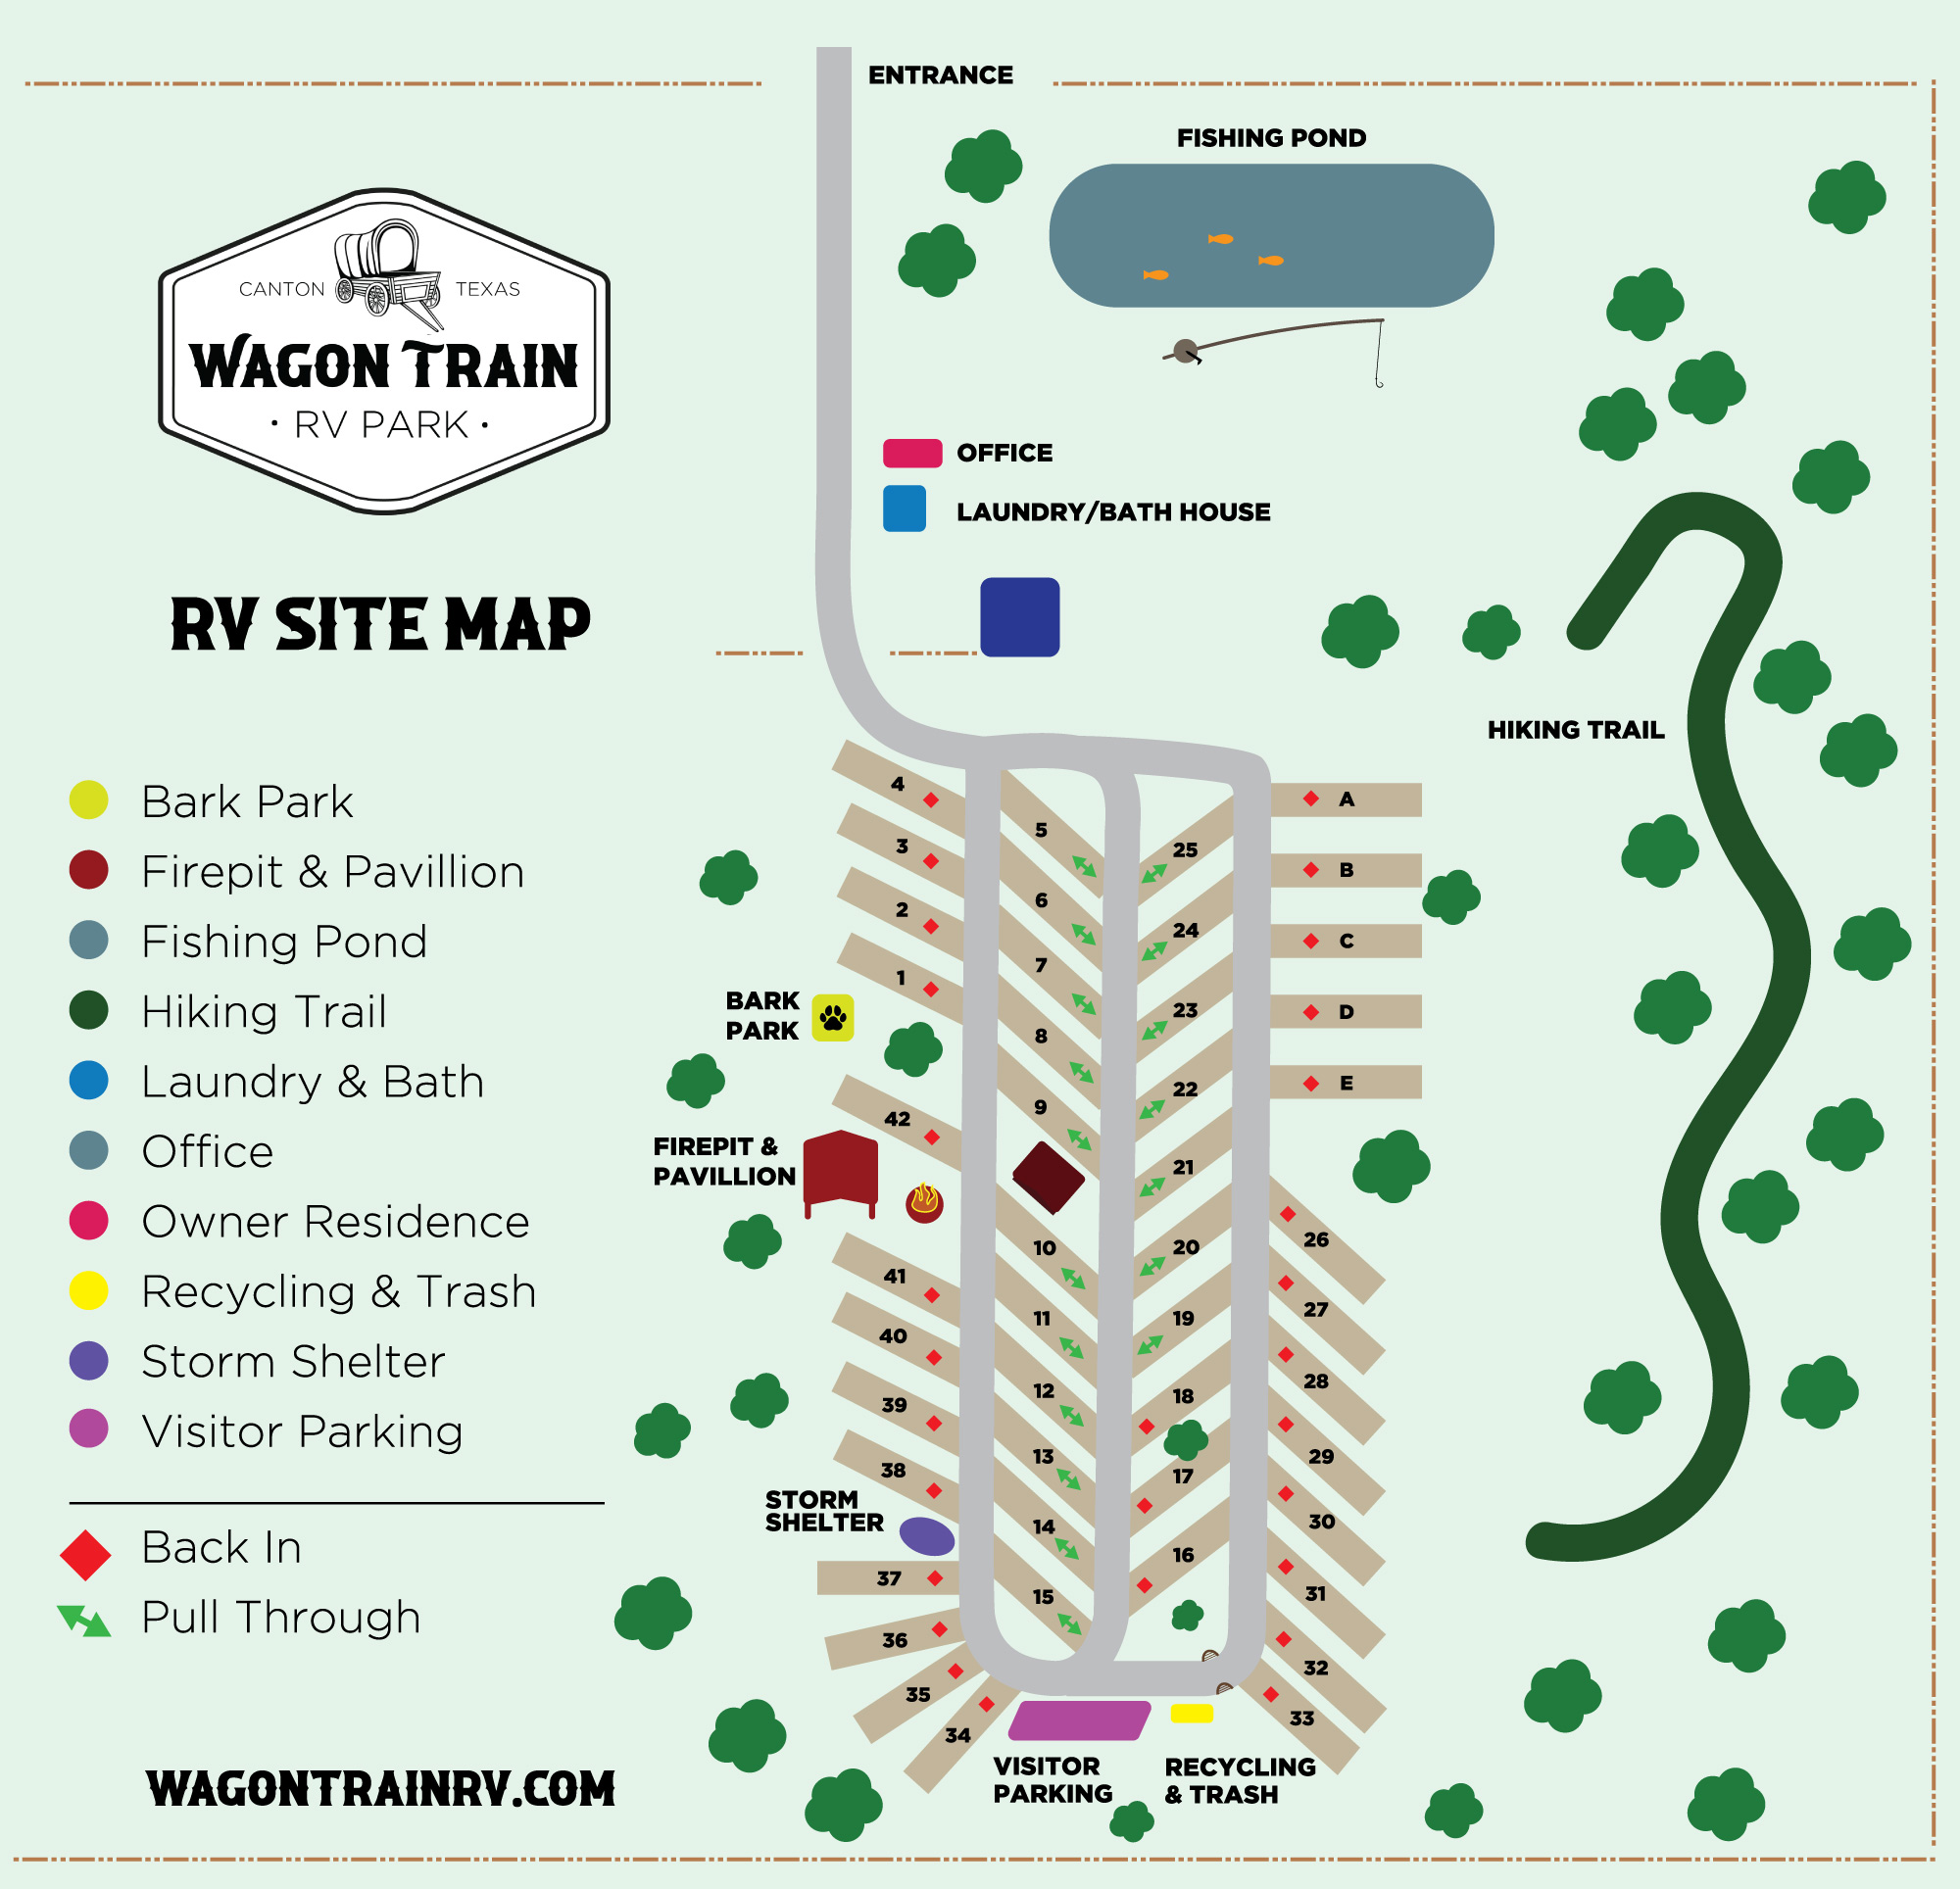 Wagon Train RV Park Map of RV Sites